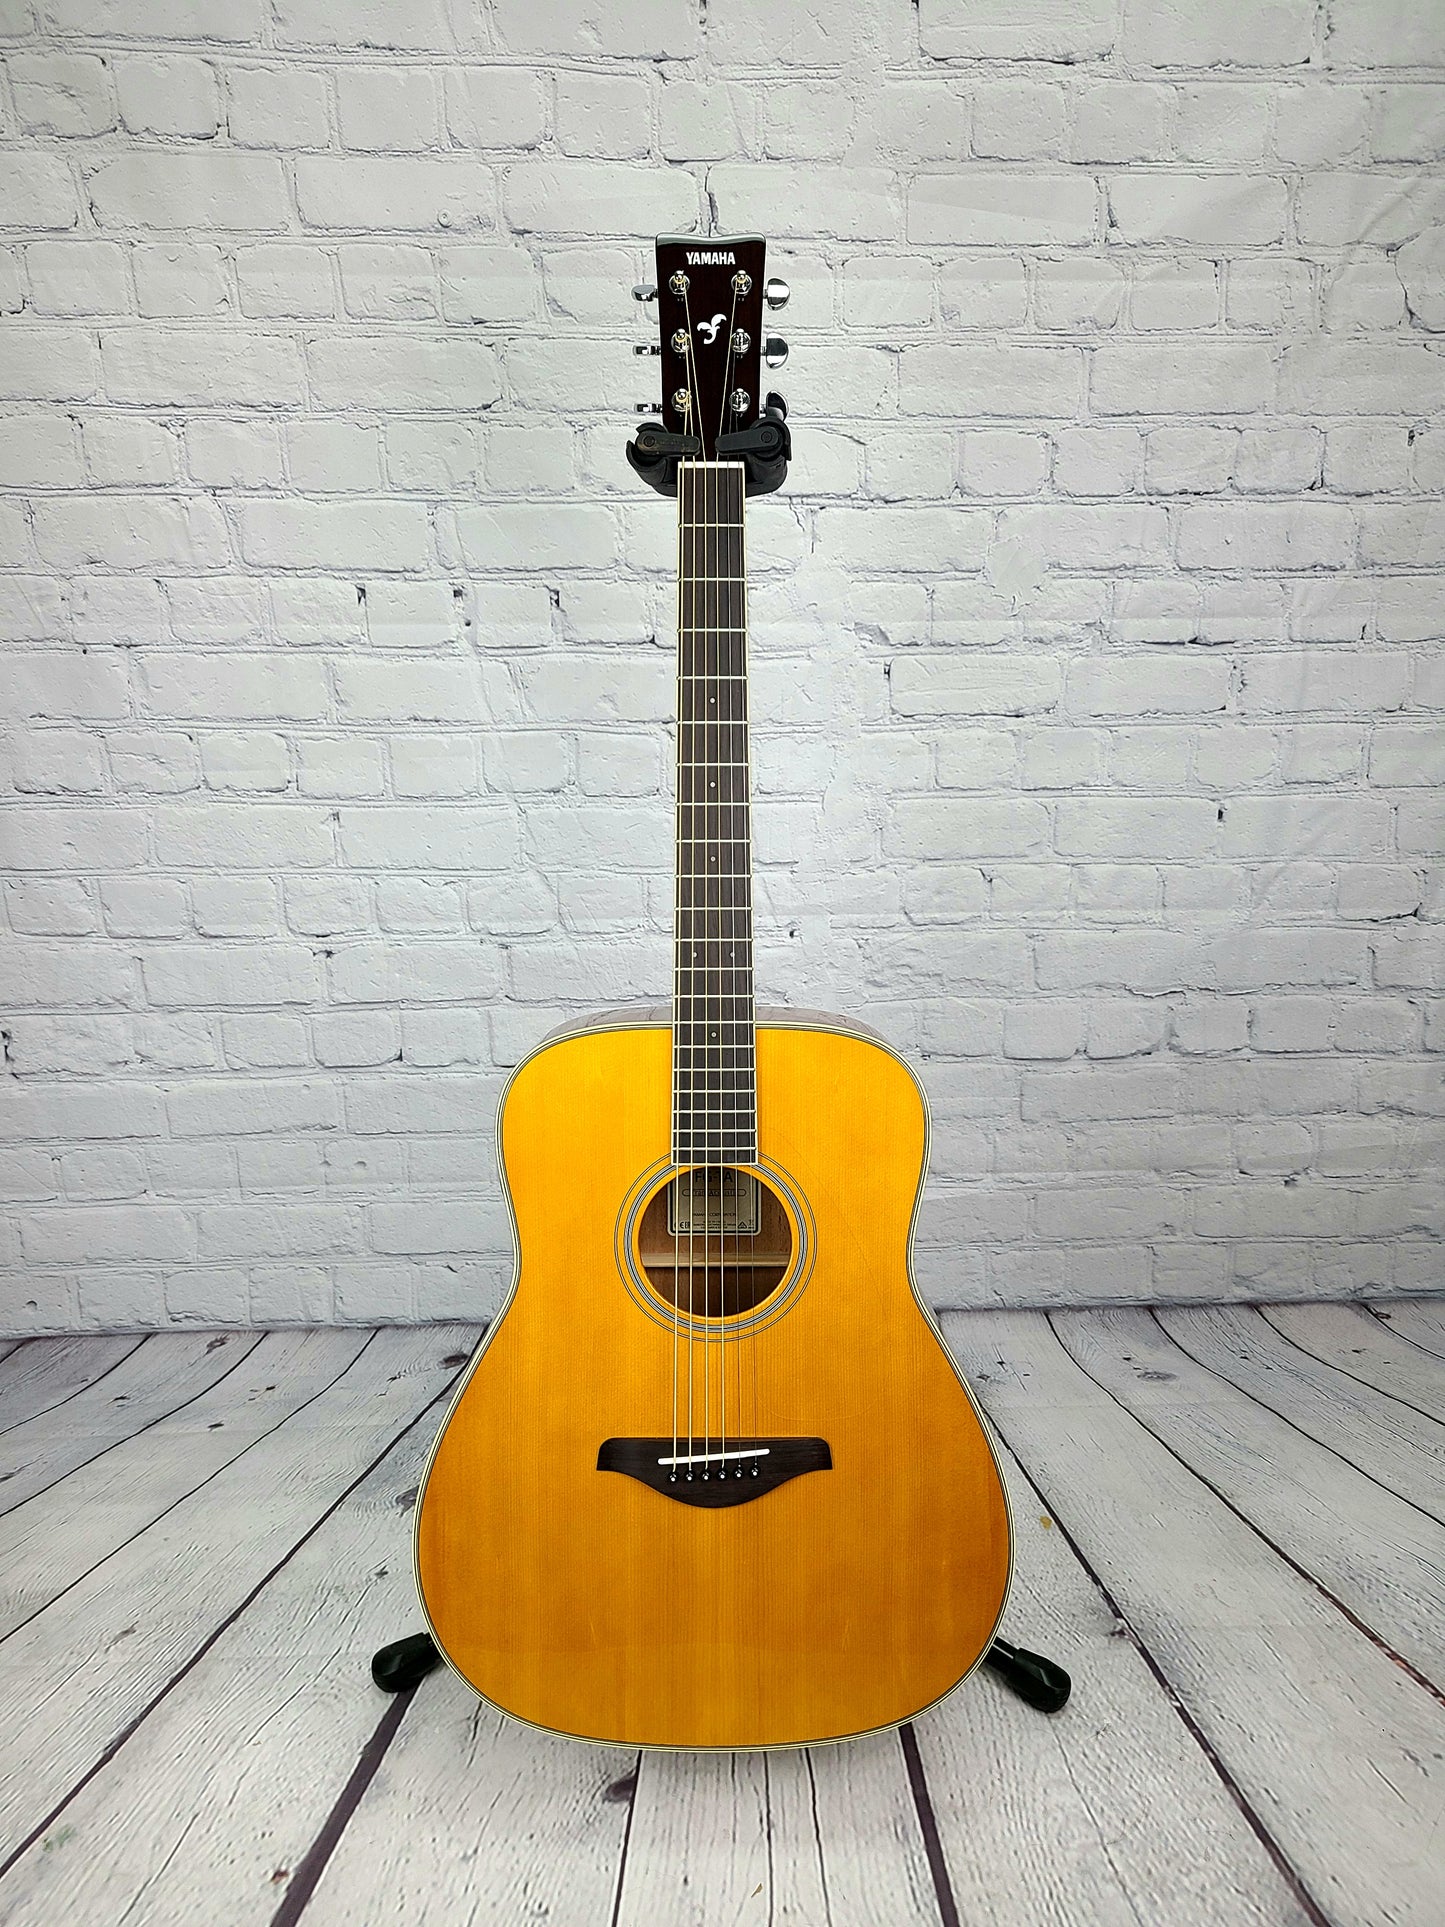 Yamaha FG-TA VT TransAcoustic Vintage Tint Electric Acoustic Guitar